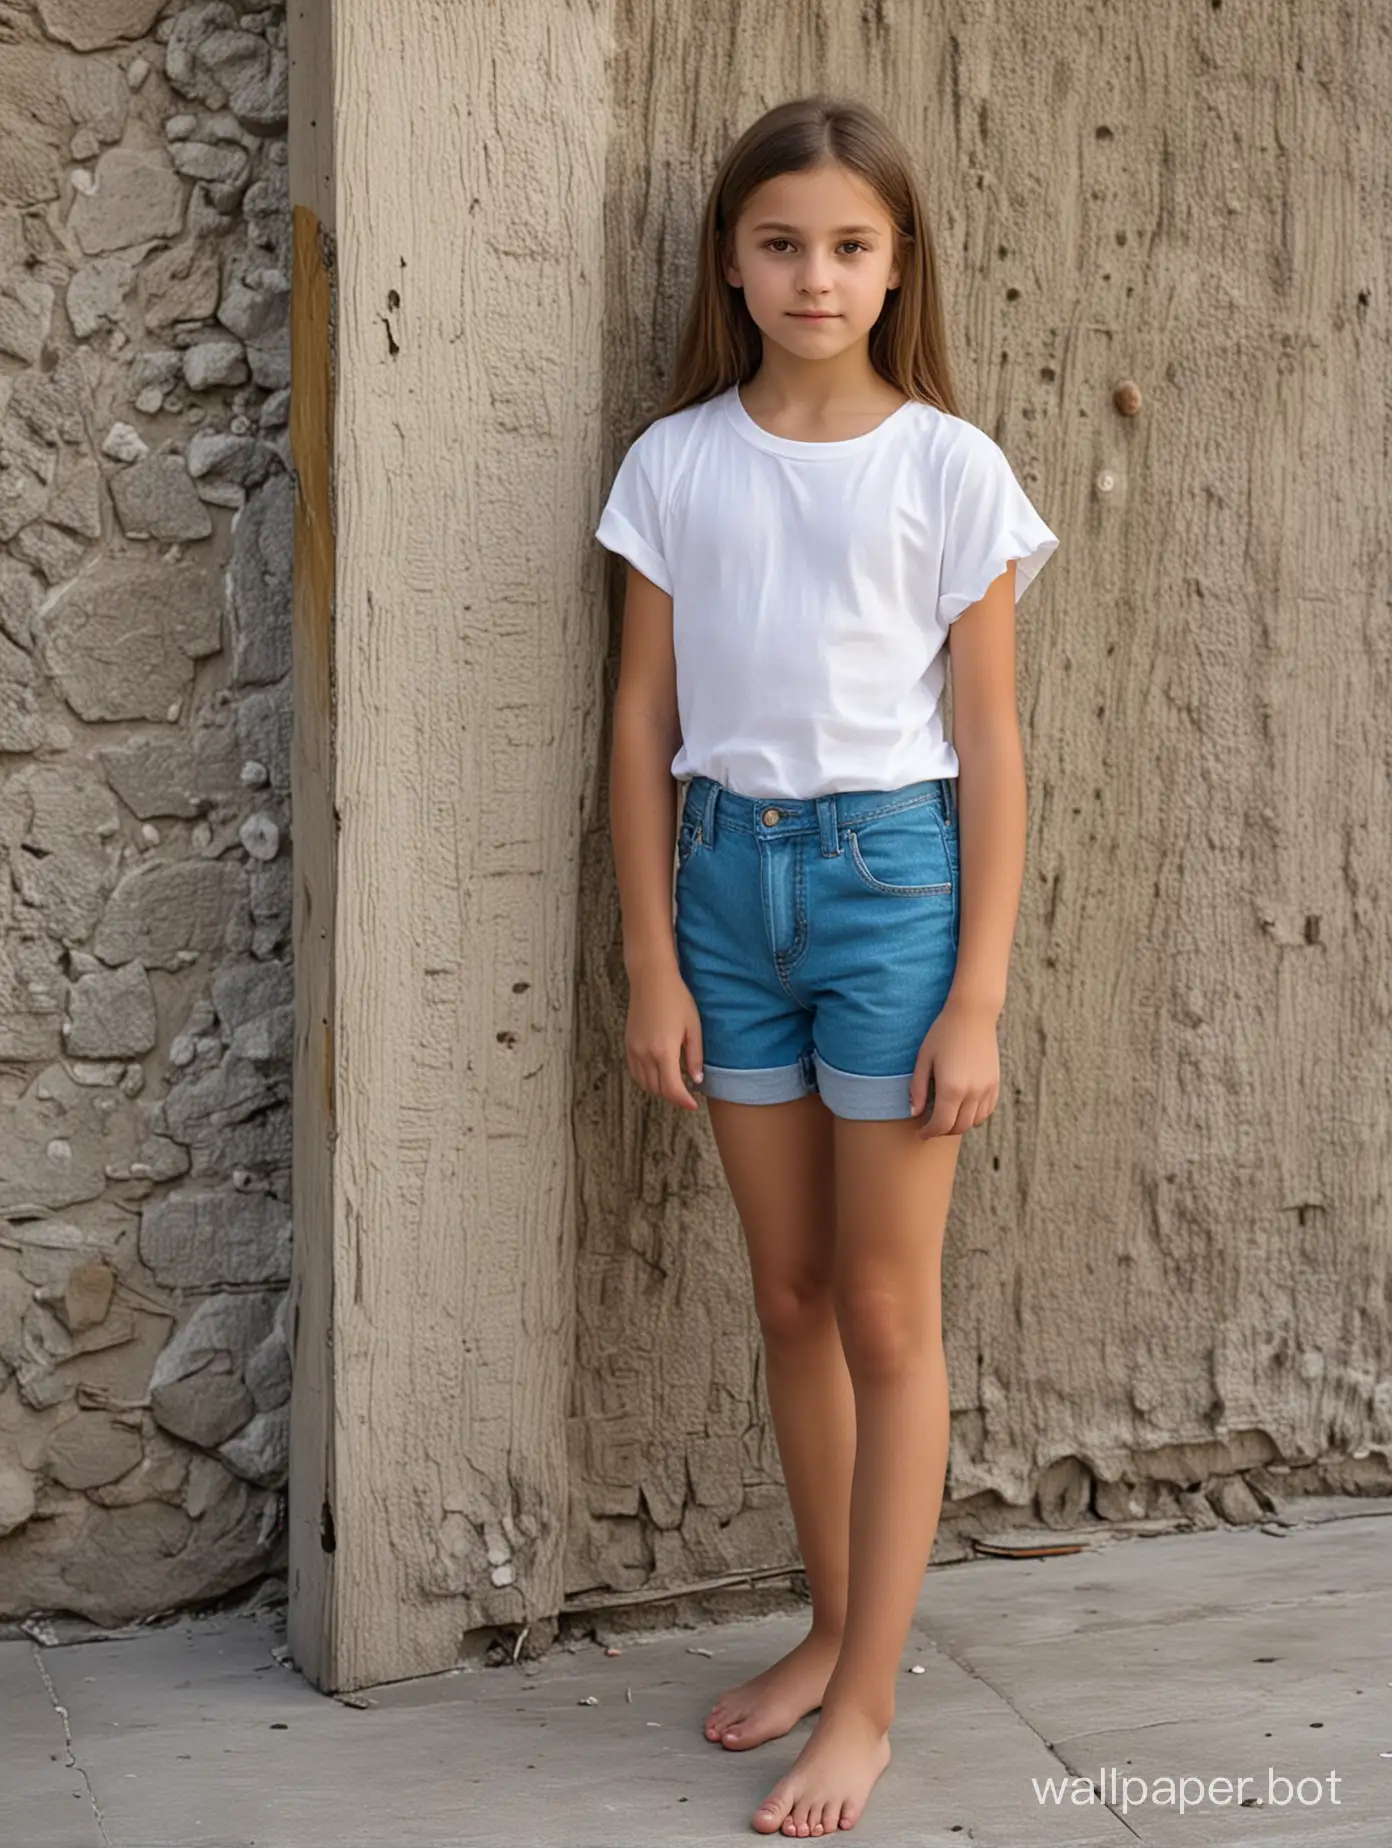 An 11-year-old girl poses for an artist, Crimea, full-length, shorts